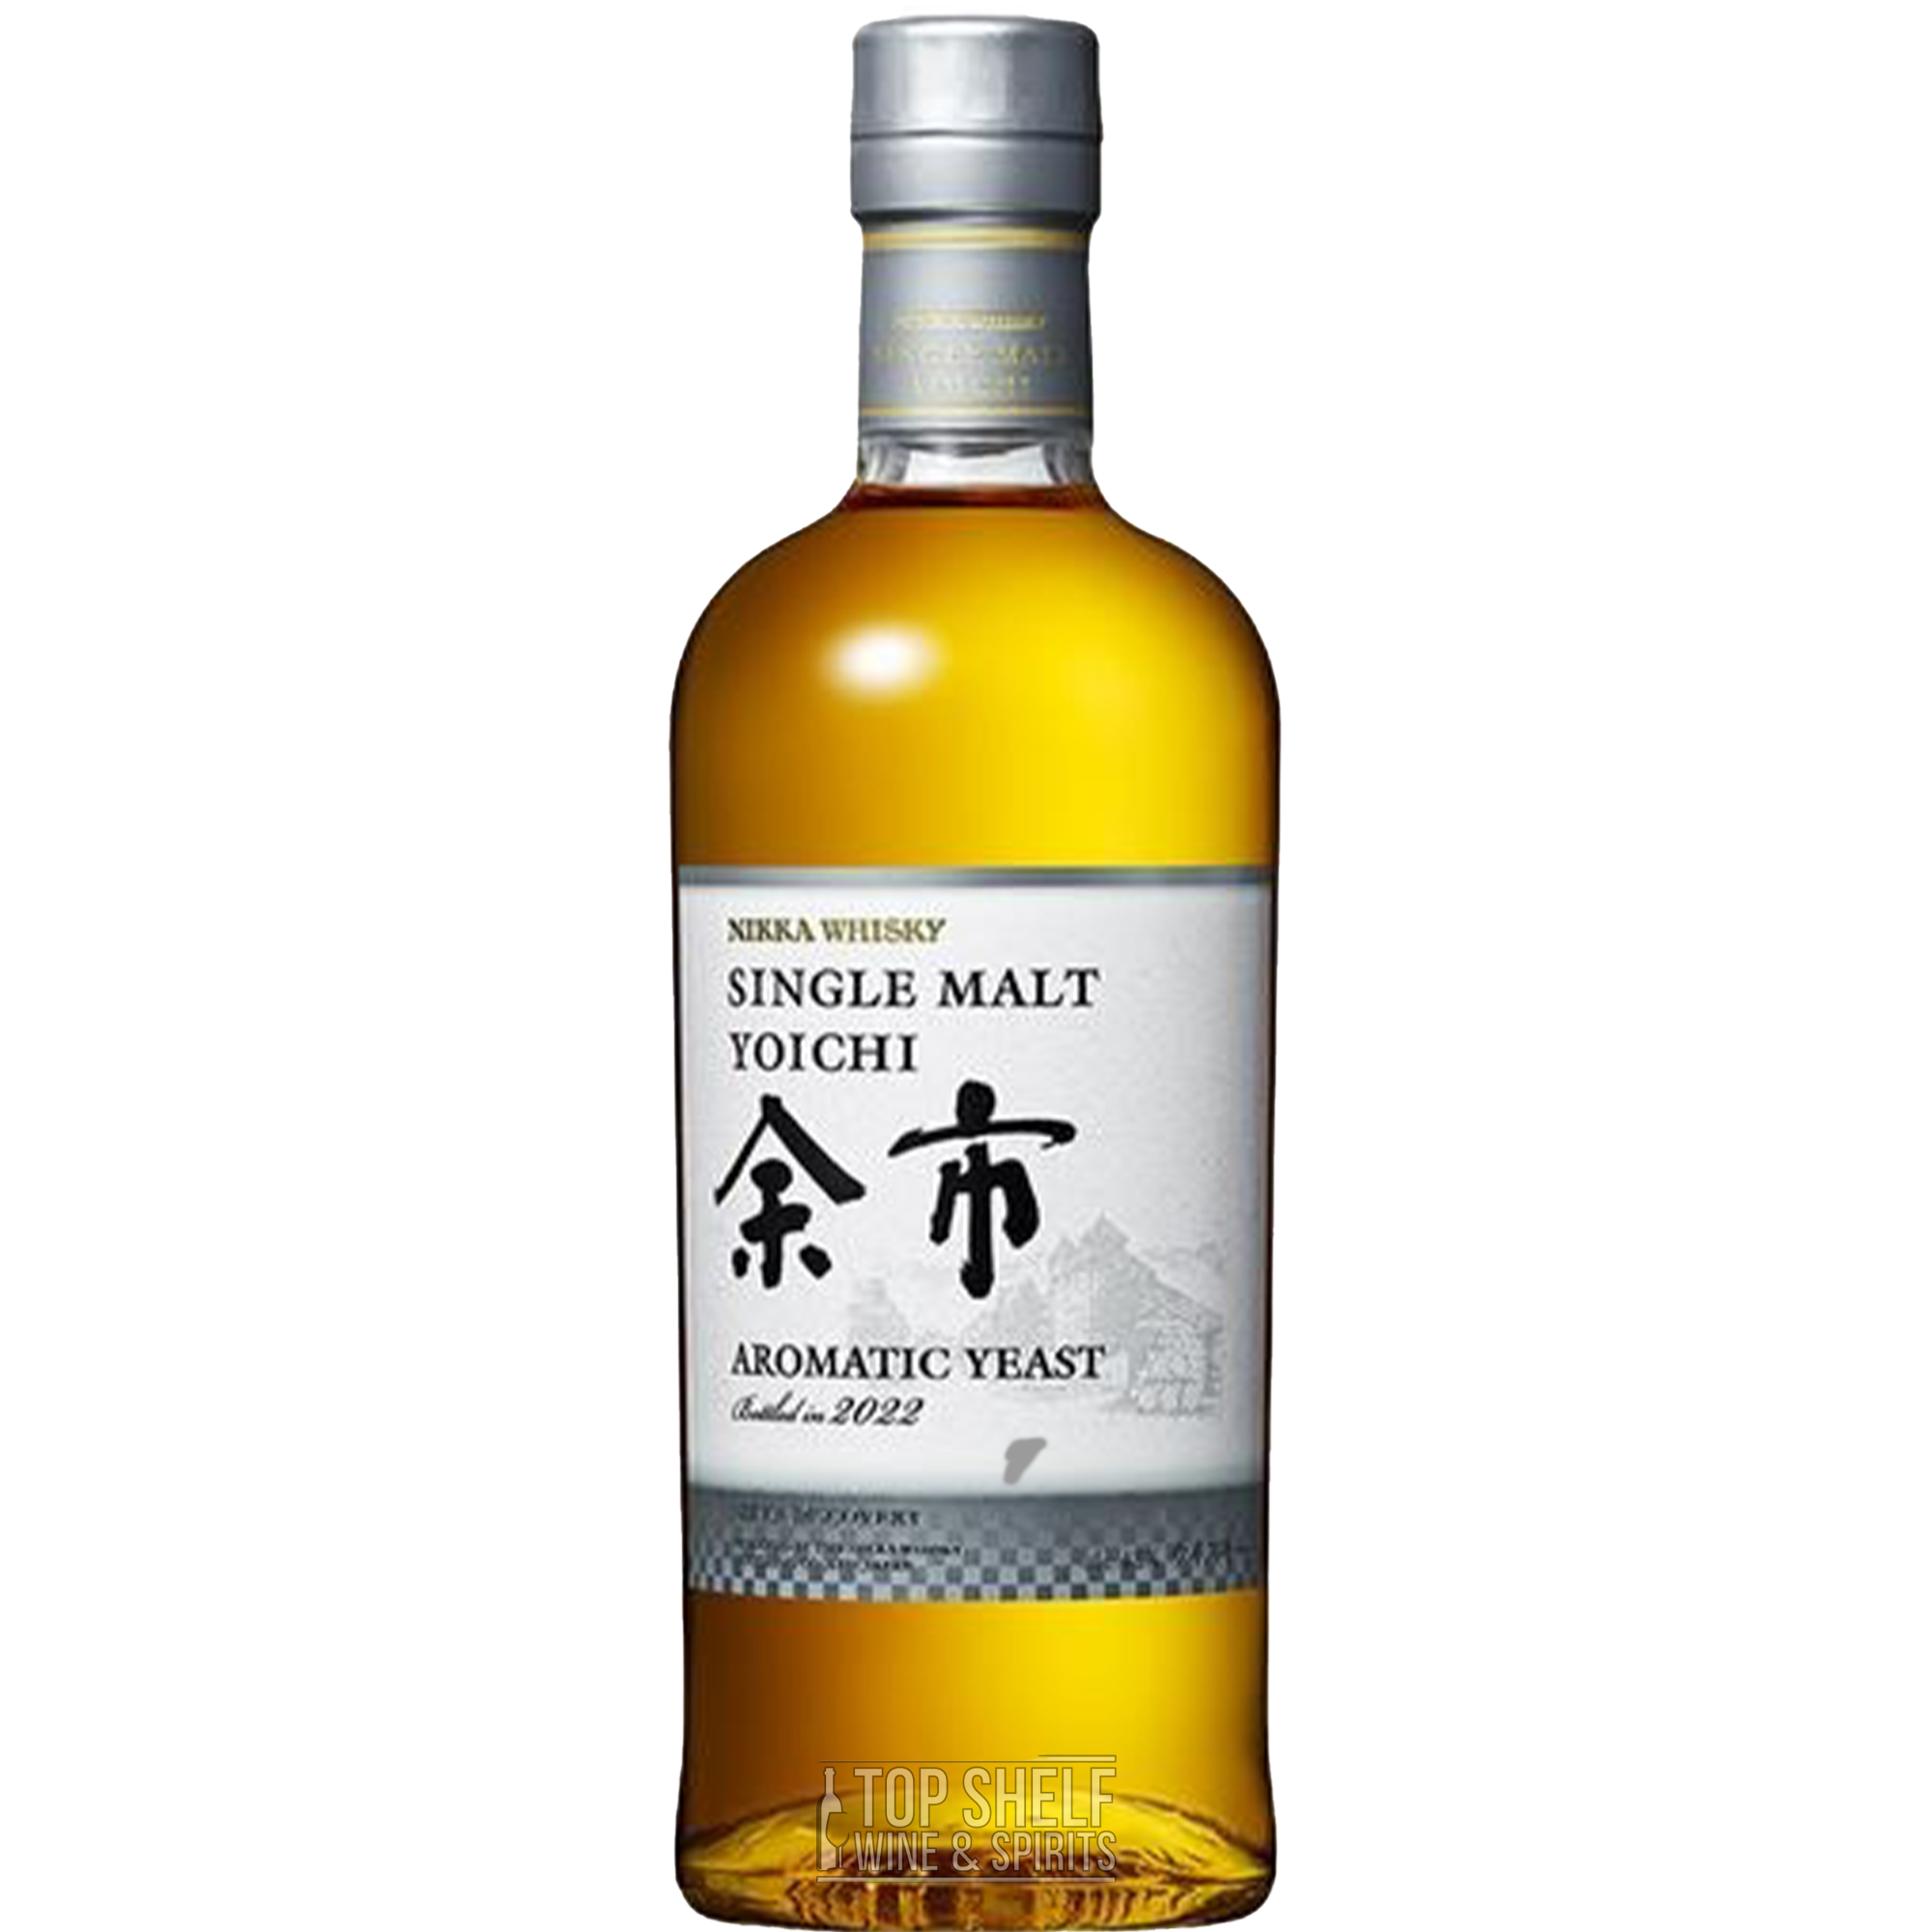 Nikka Yoichi Aromatic Yeast 2022 Single Malt Whisky